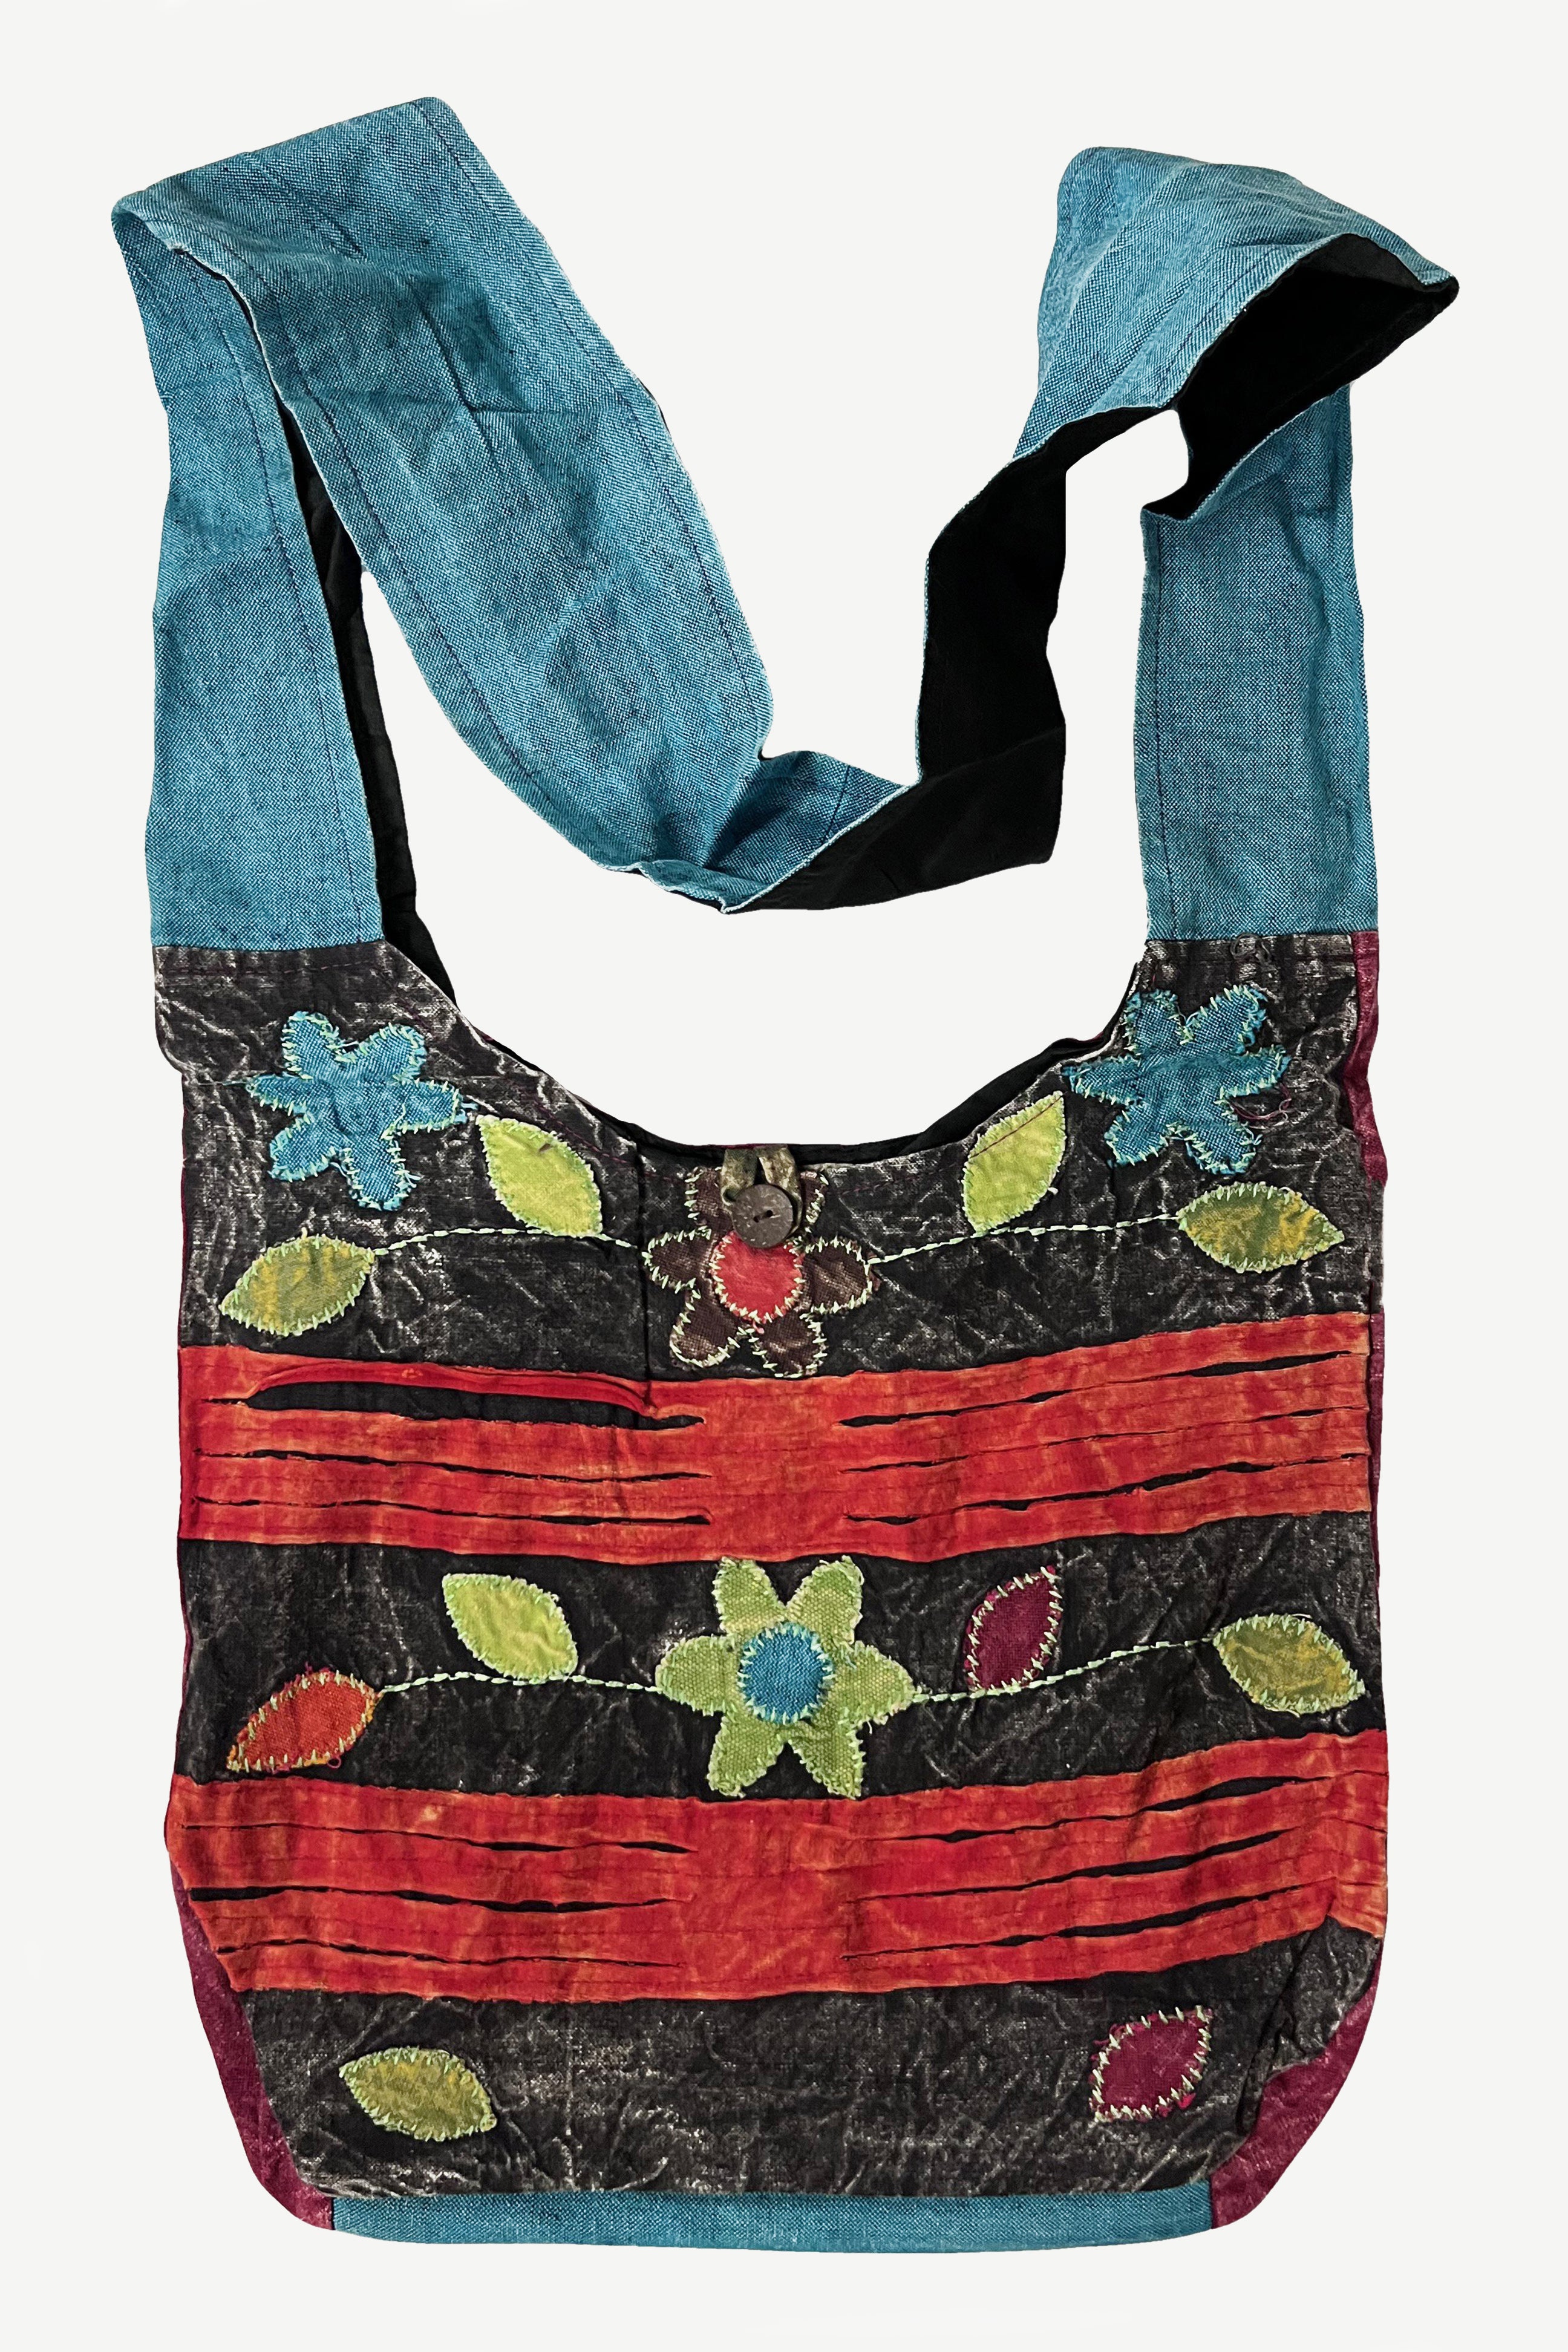 Small Crossbody Bag Little Girls Shoulder Bag Cute Handbag Purse Chain Messenger  Bag for Teens (Black) - Walmart.com